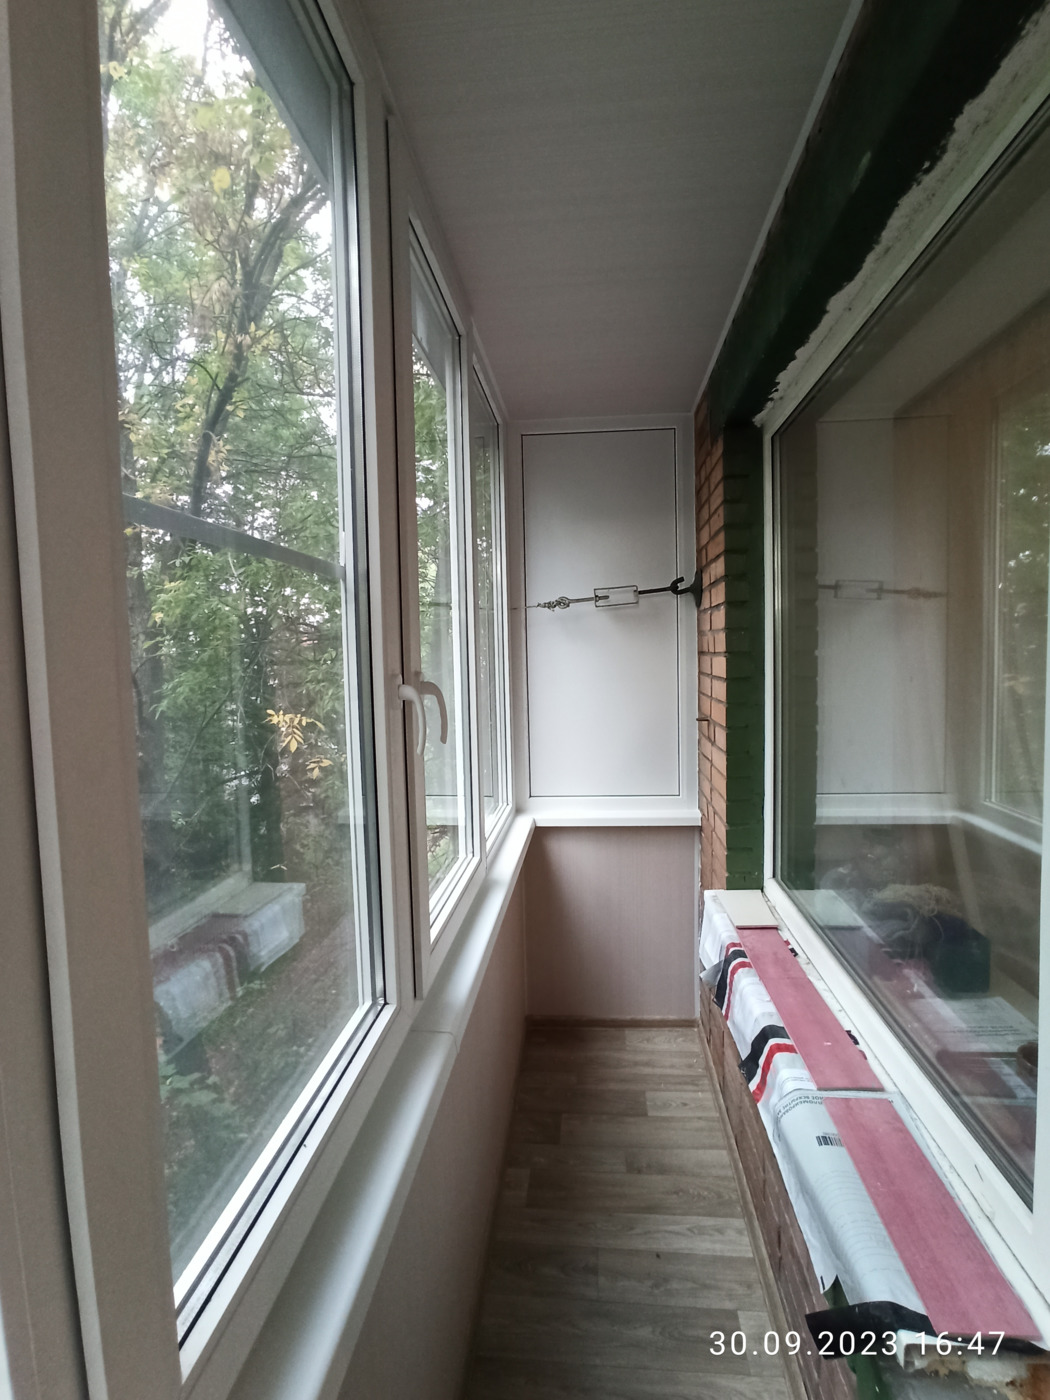 Установка и отделка окон, откосов. Окна и балконы